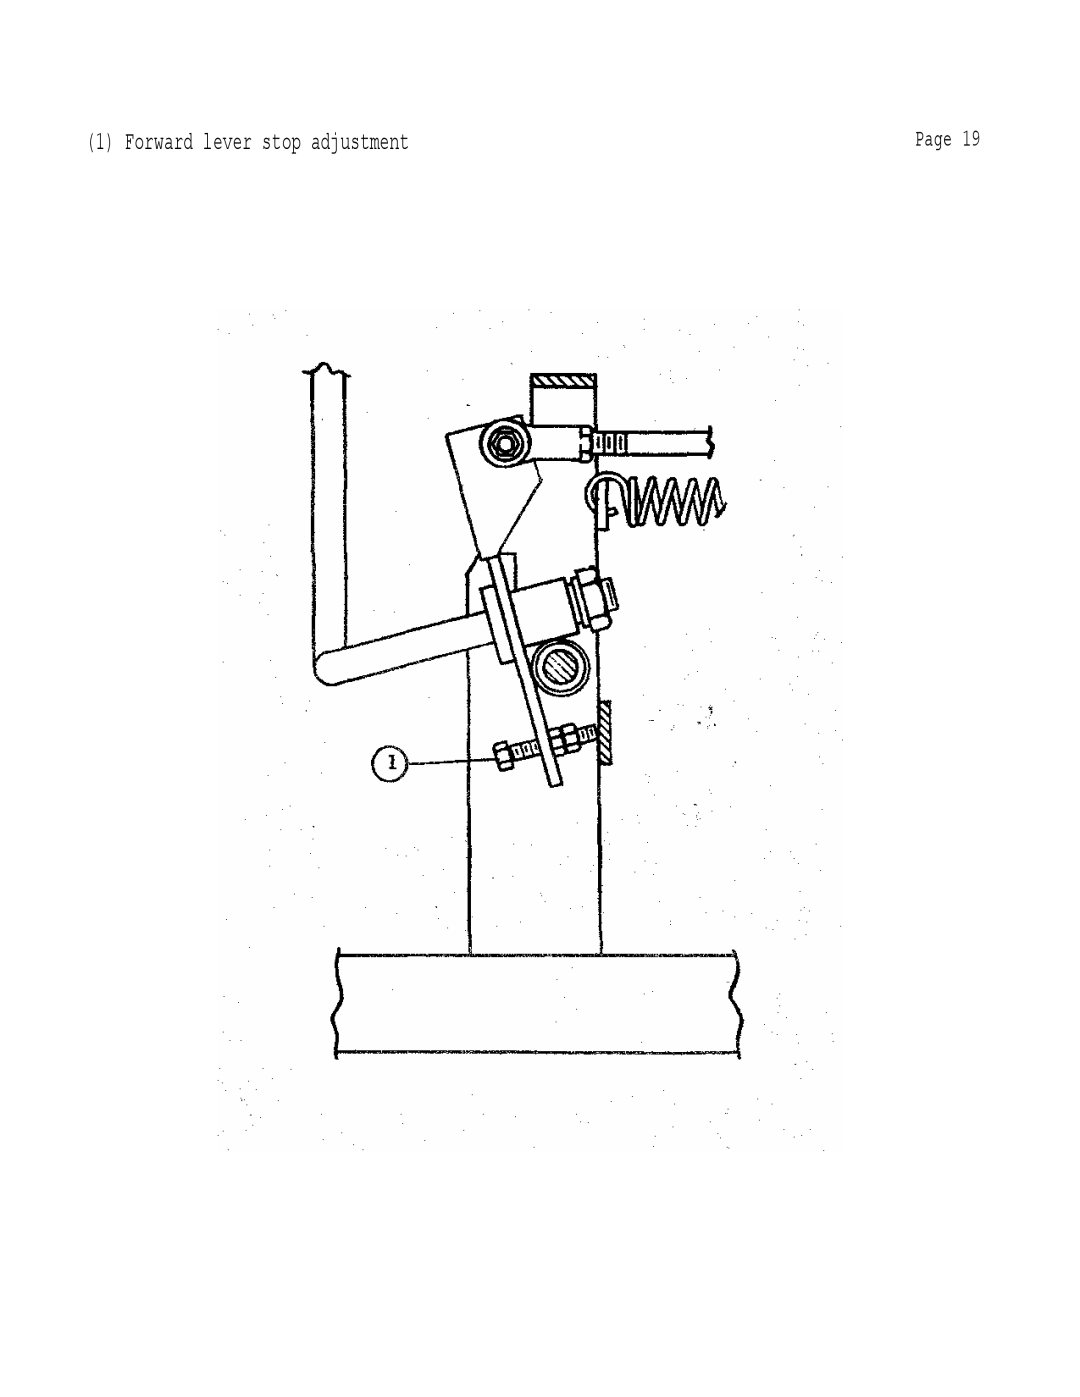 Dixon 501 manual Forward lever stop adjustment, Page 